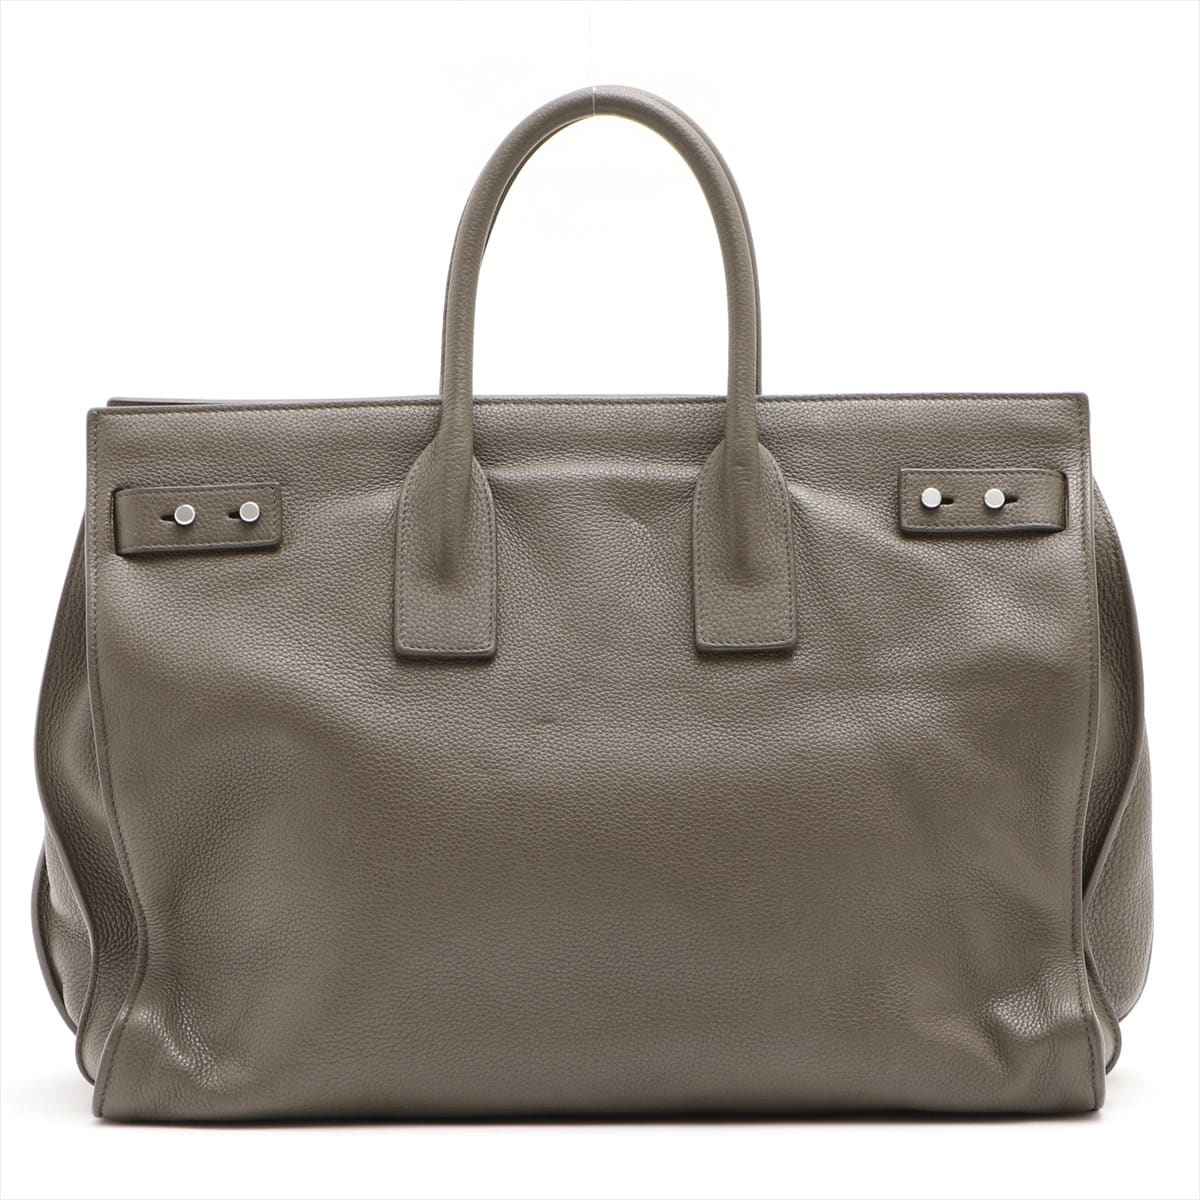 Saint Laurent Paris Sac de Jour Leather 2way handbag Grey